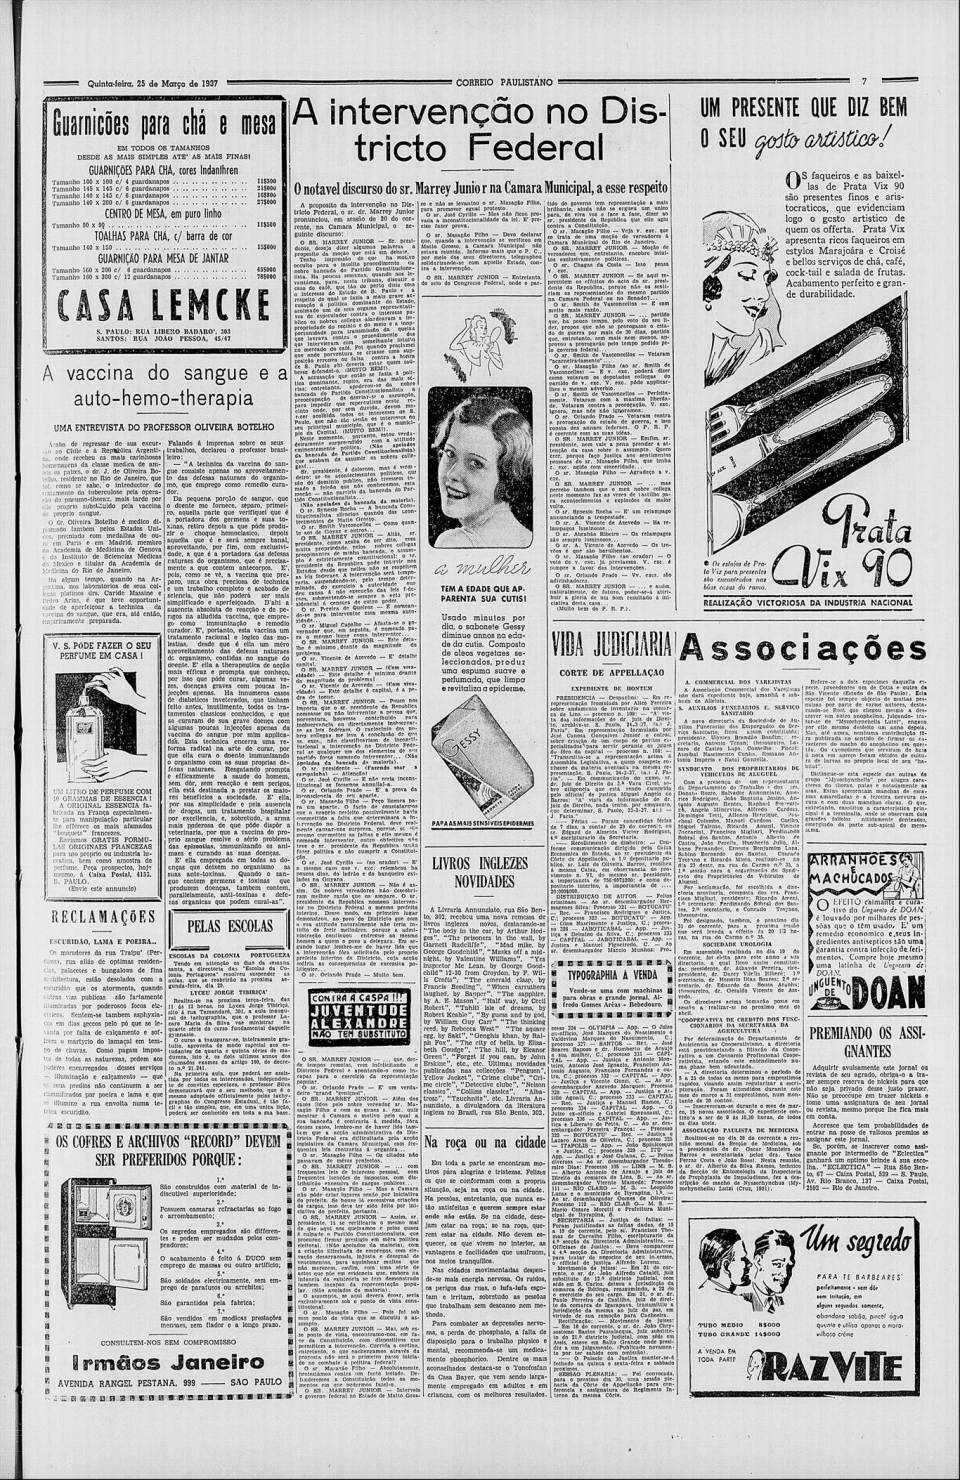 art-bebedouro-alfredo-gomes-areias-venda-da-tipografia-25-3-1937page-correio-paulistano